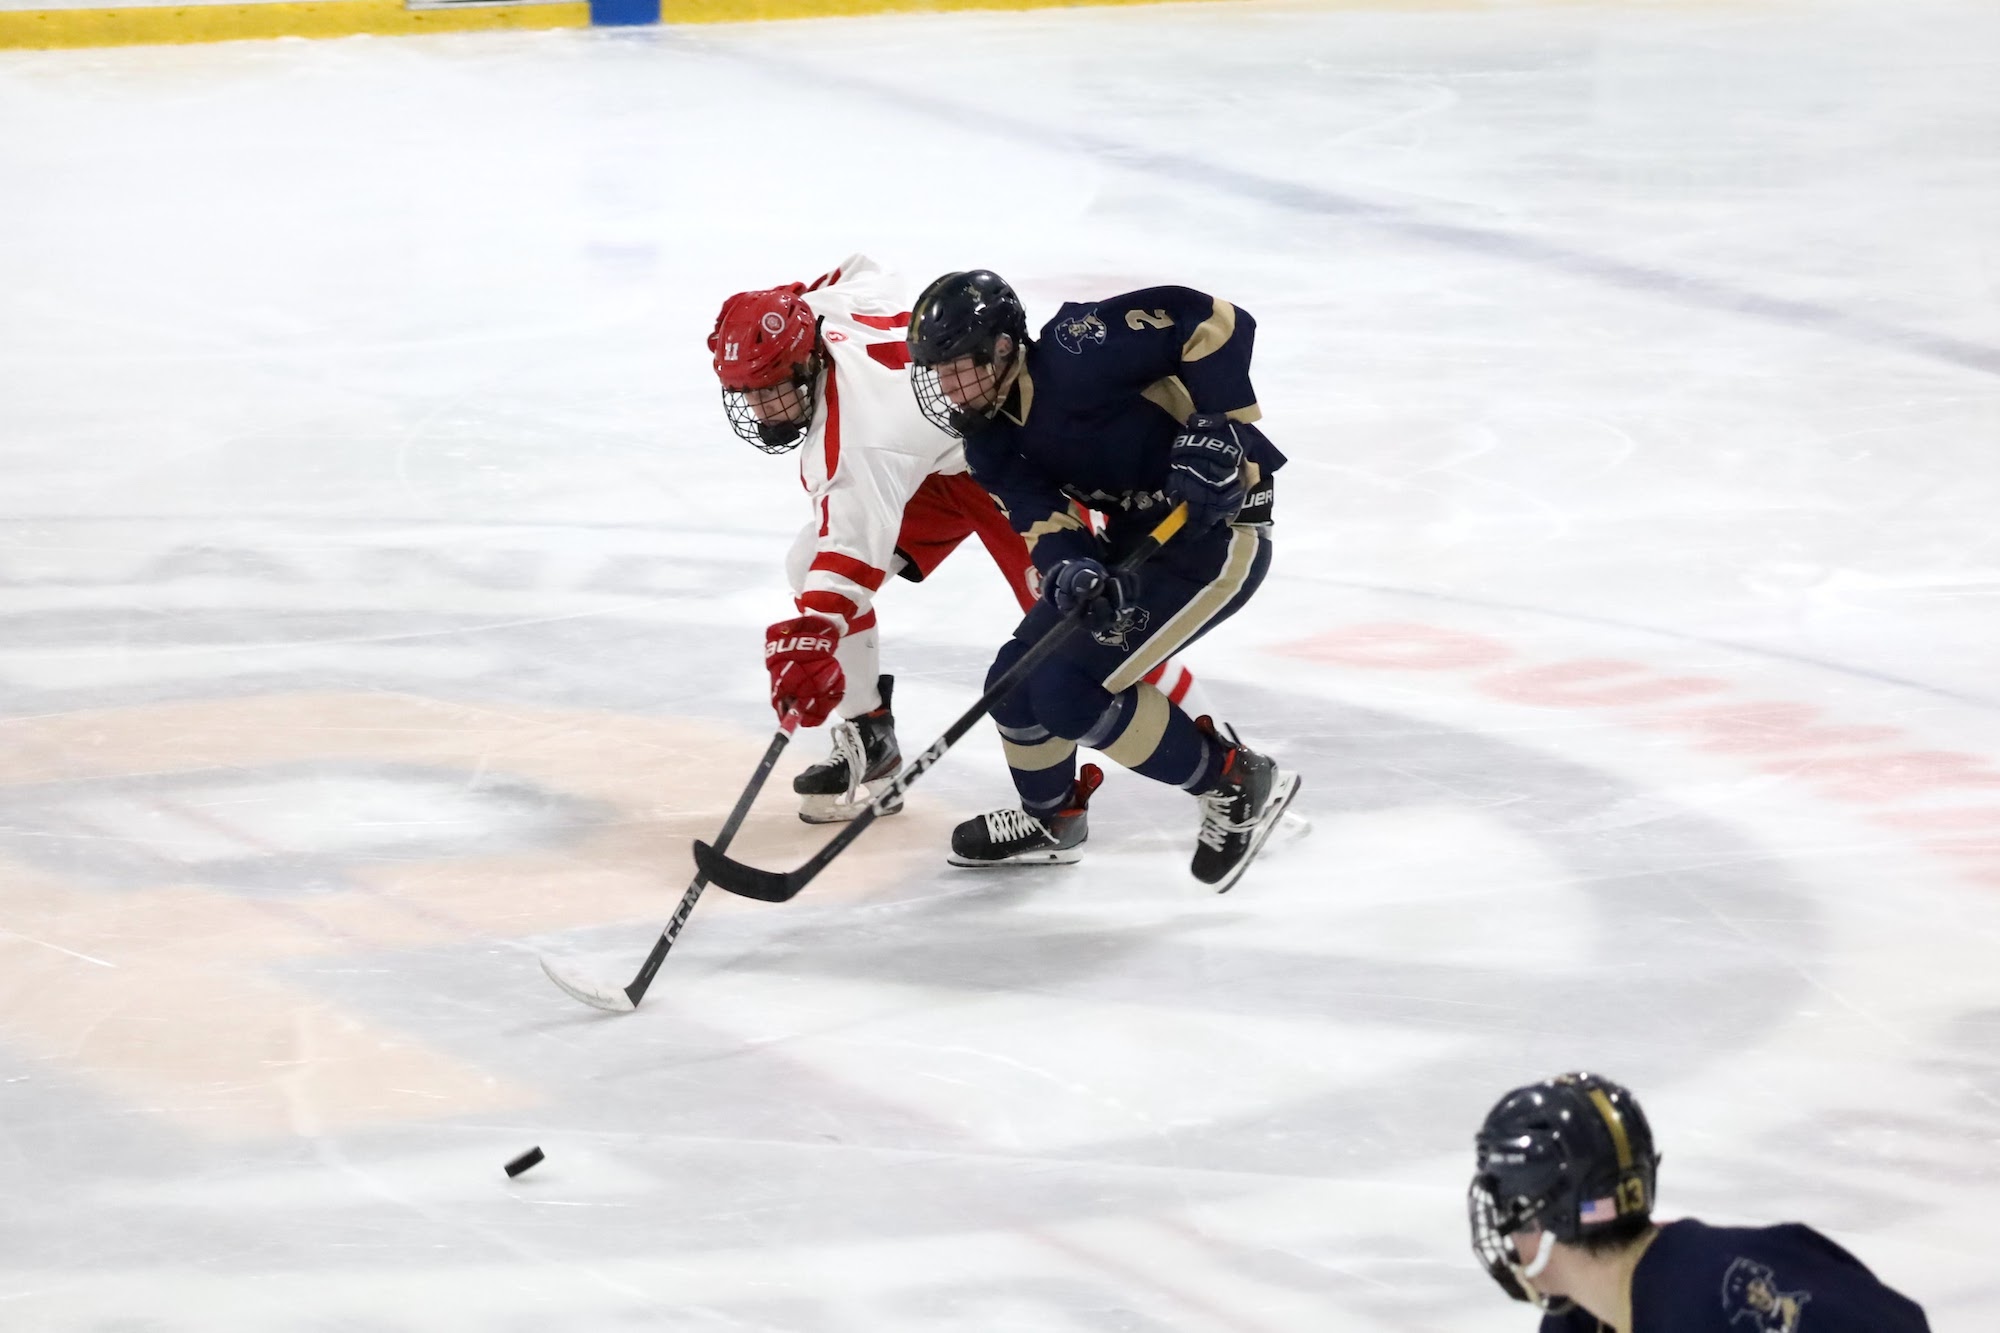 Last-second goal pushes St. John’s past Shrewsbury in high-energy hockey matchup